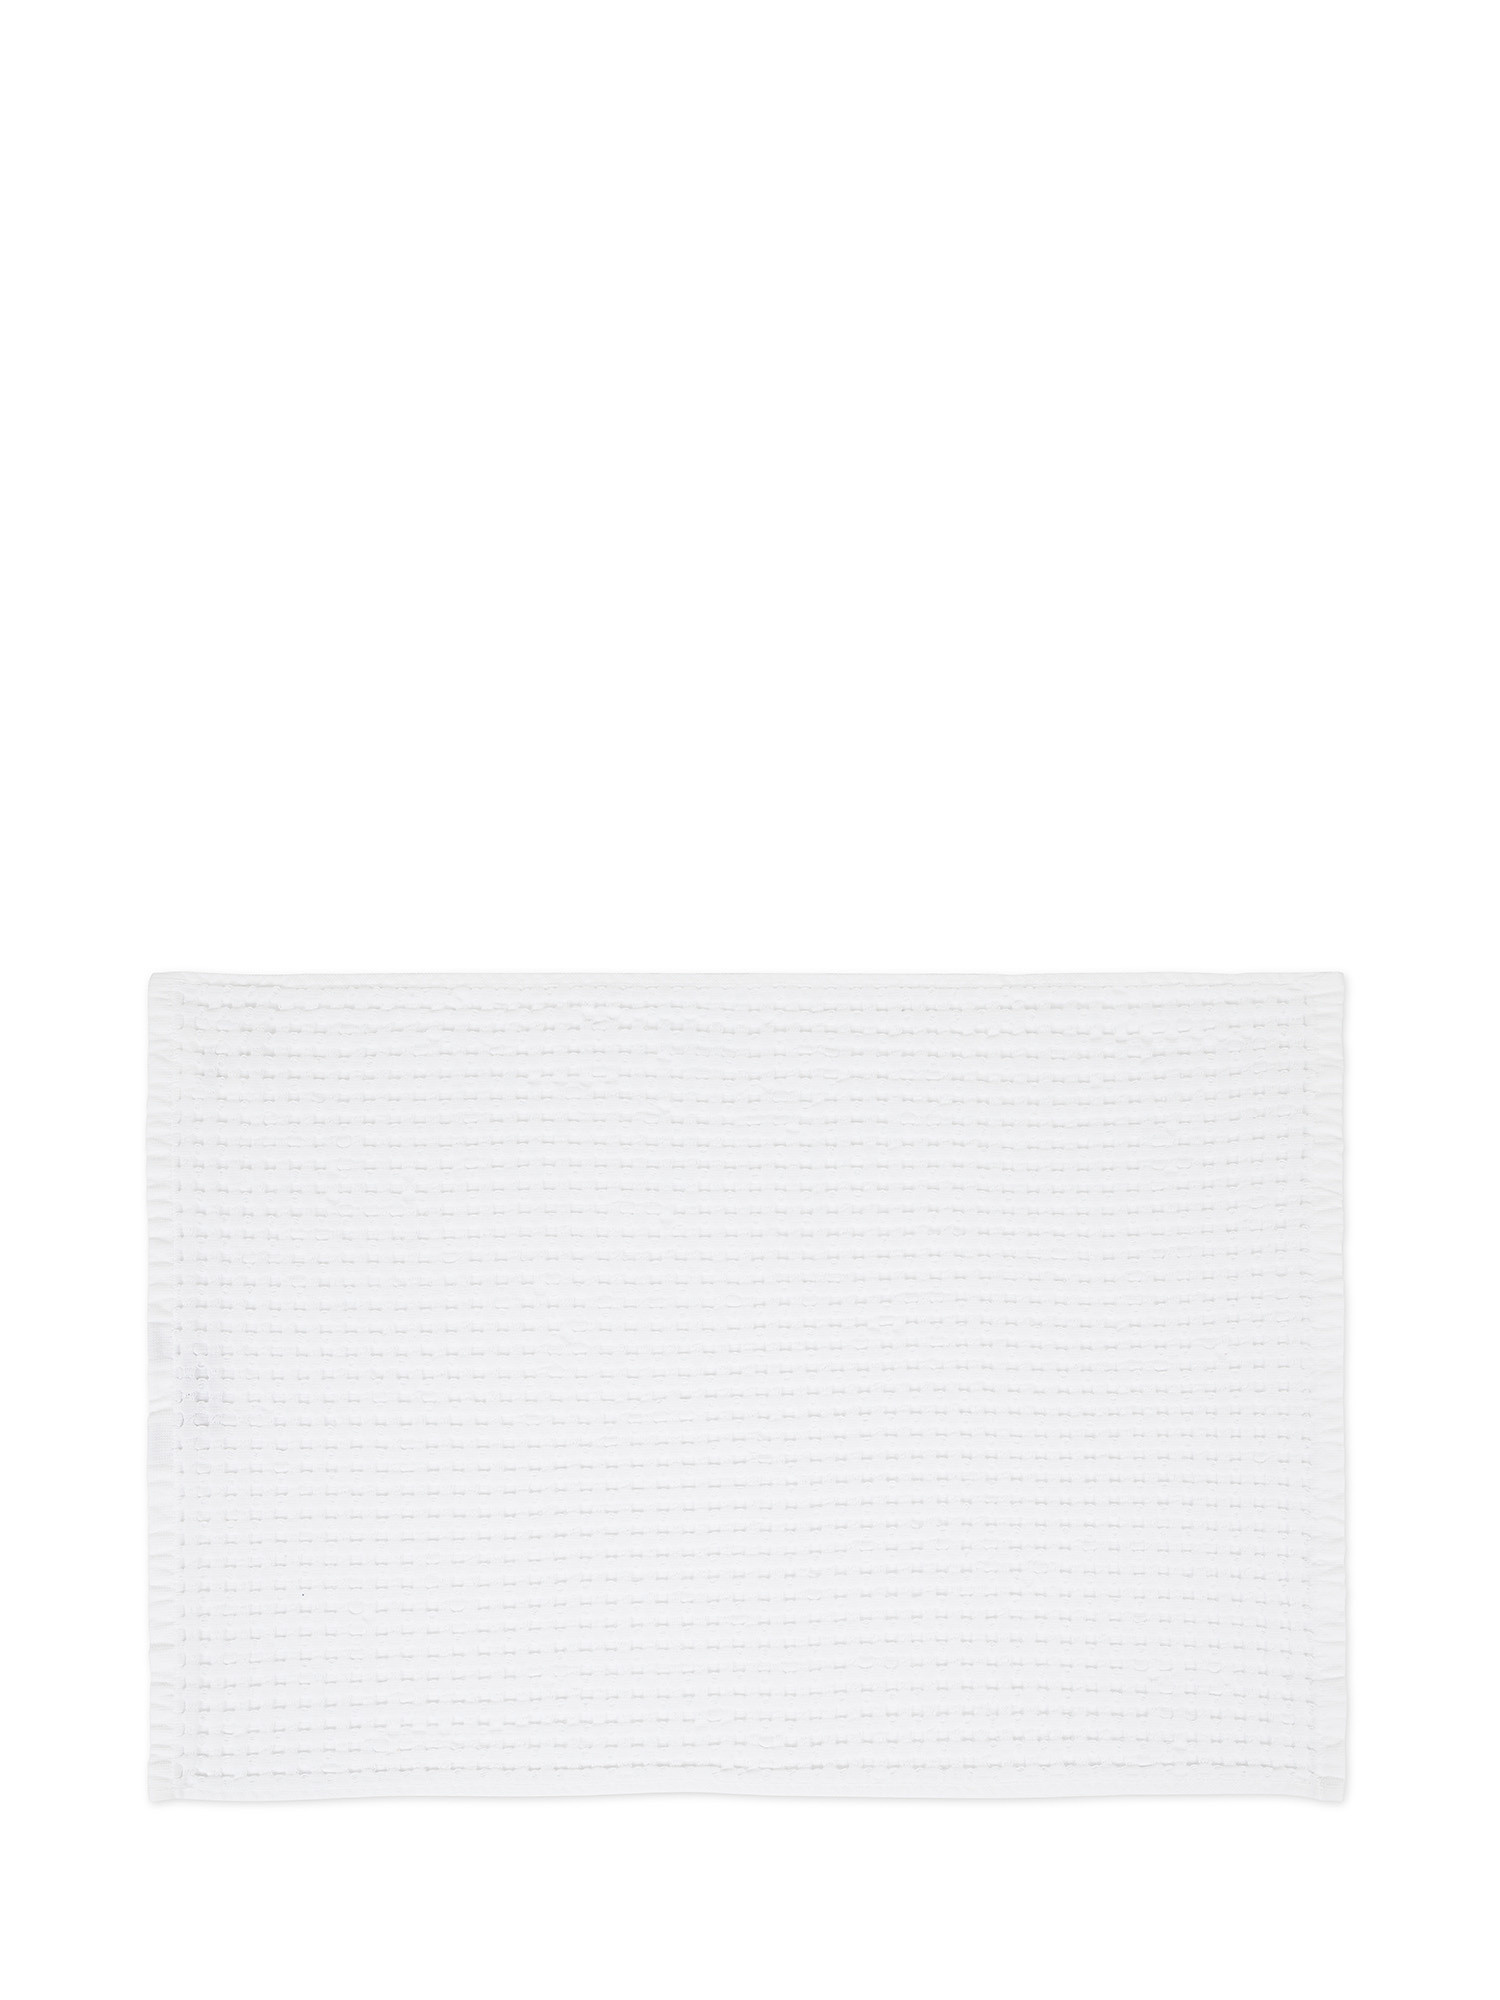 Asciugamano cotone nido d'ape, Bianco, large image number 1